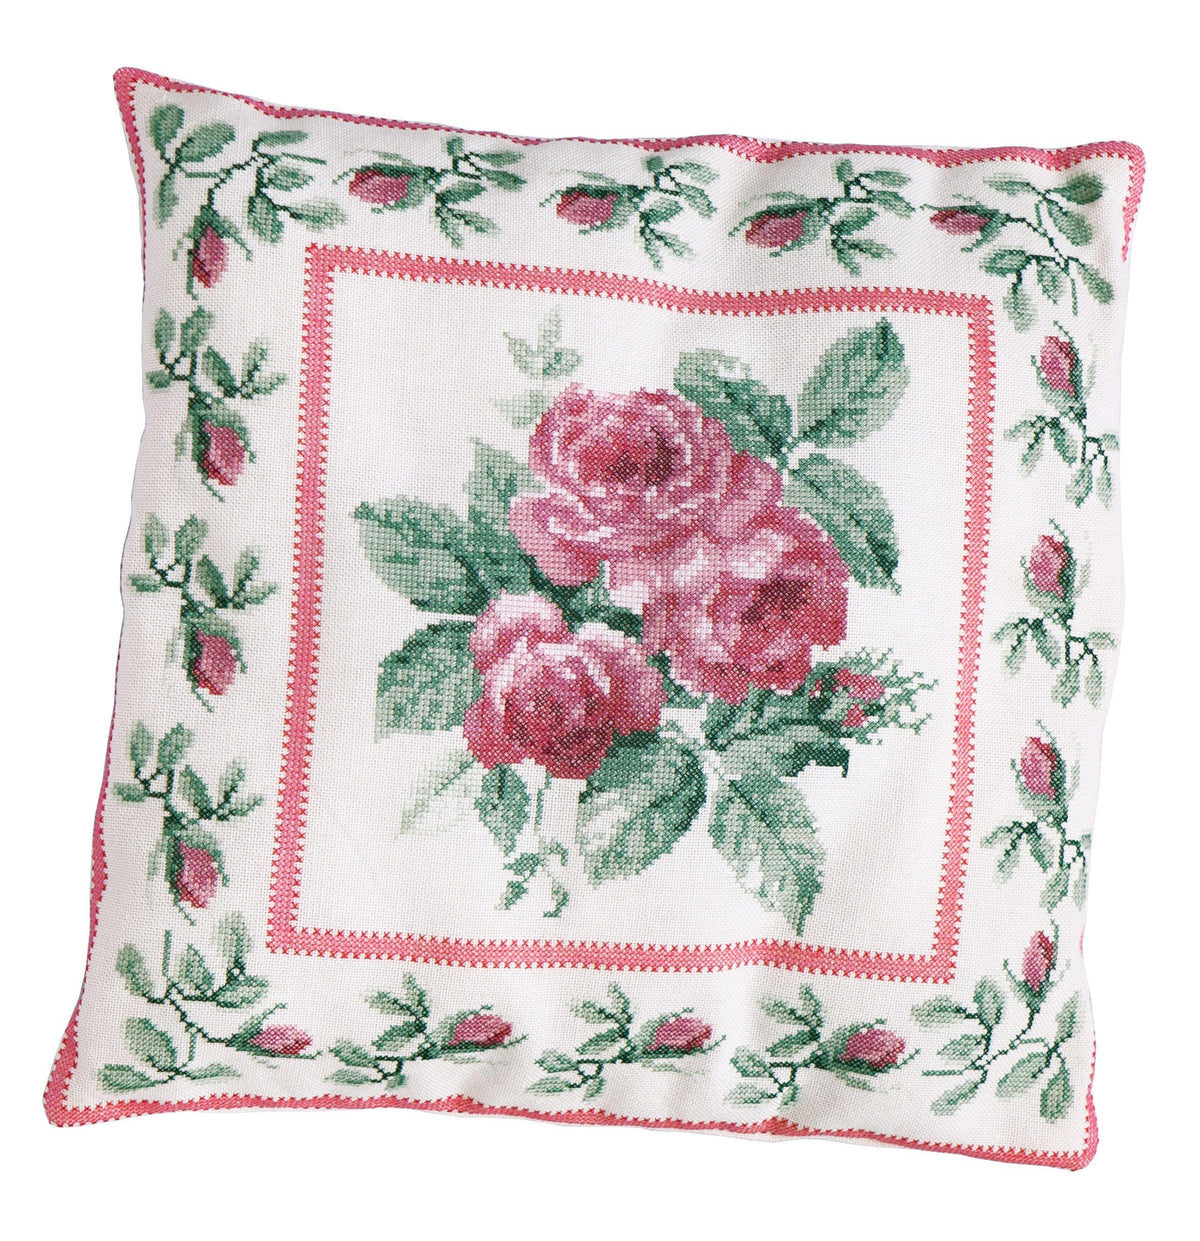 Thea Gouverneur - Counted Cross Stitch Kit - Rose Bouquet Cushion - Aida - 12 count - 2034A - Thea Gouverneur Since 1959